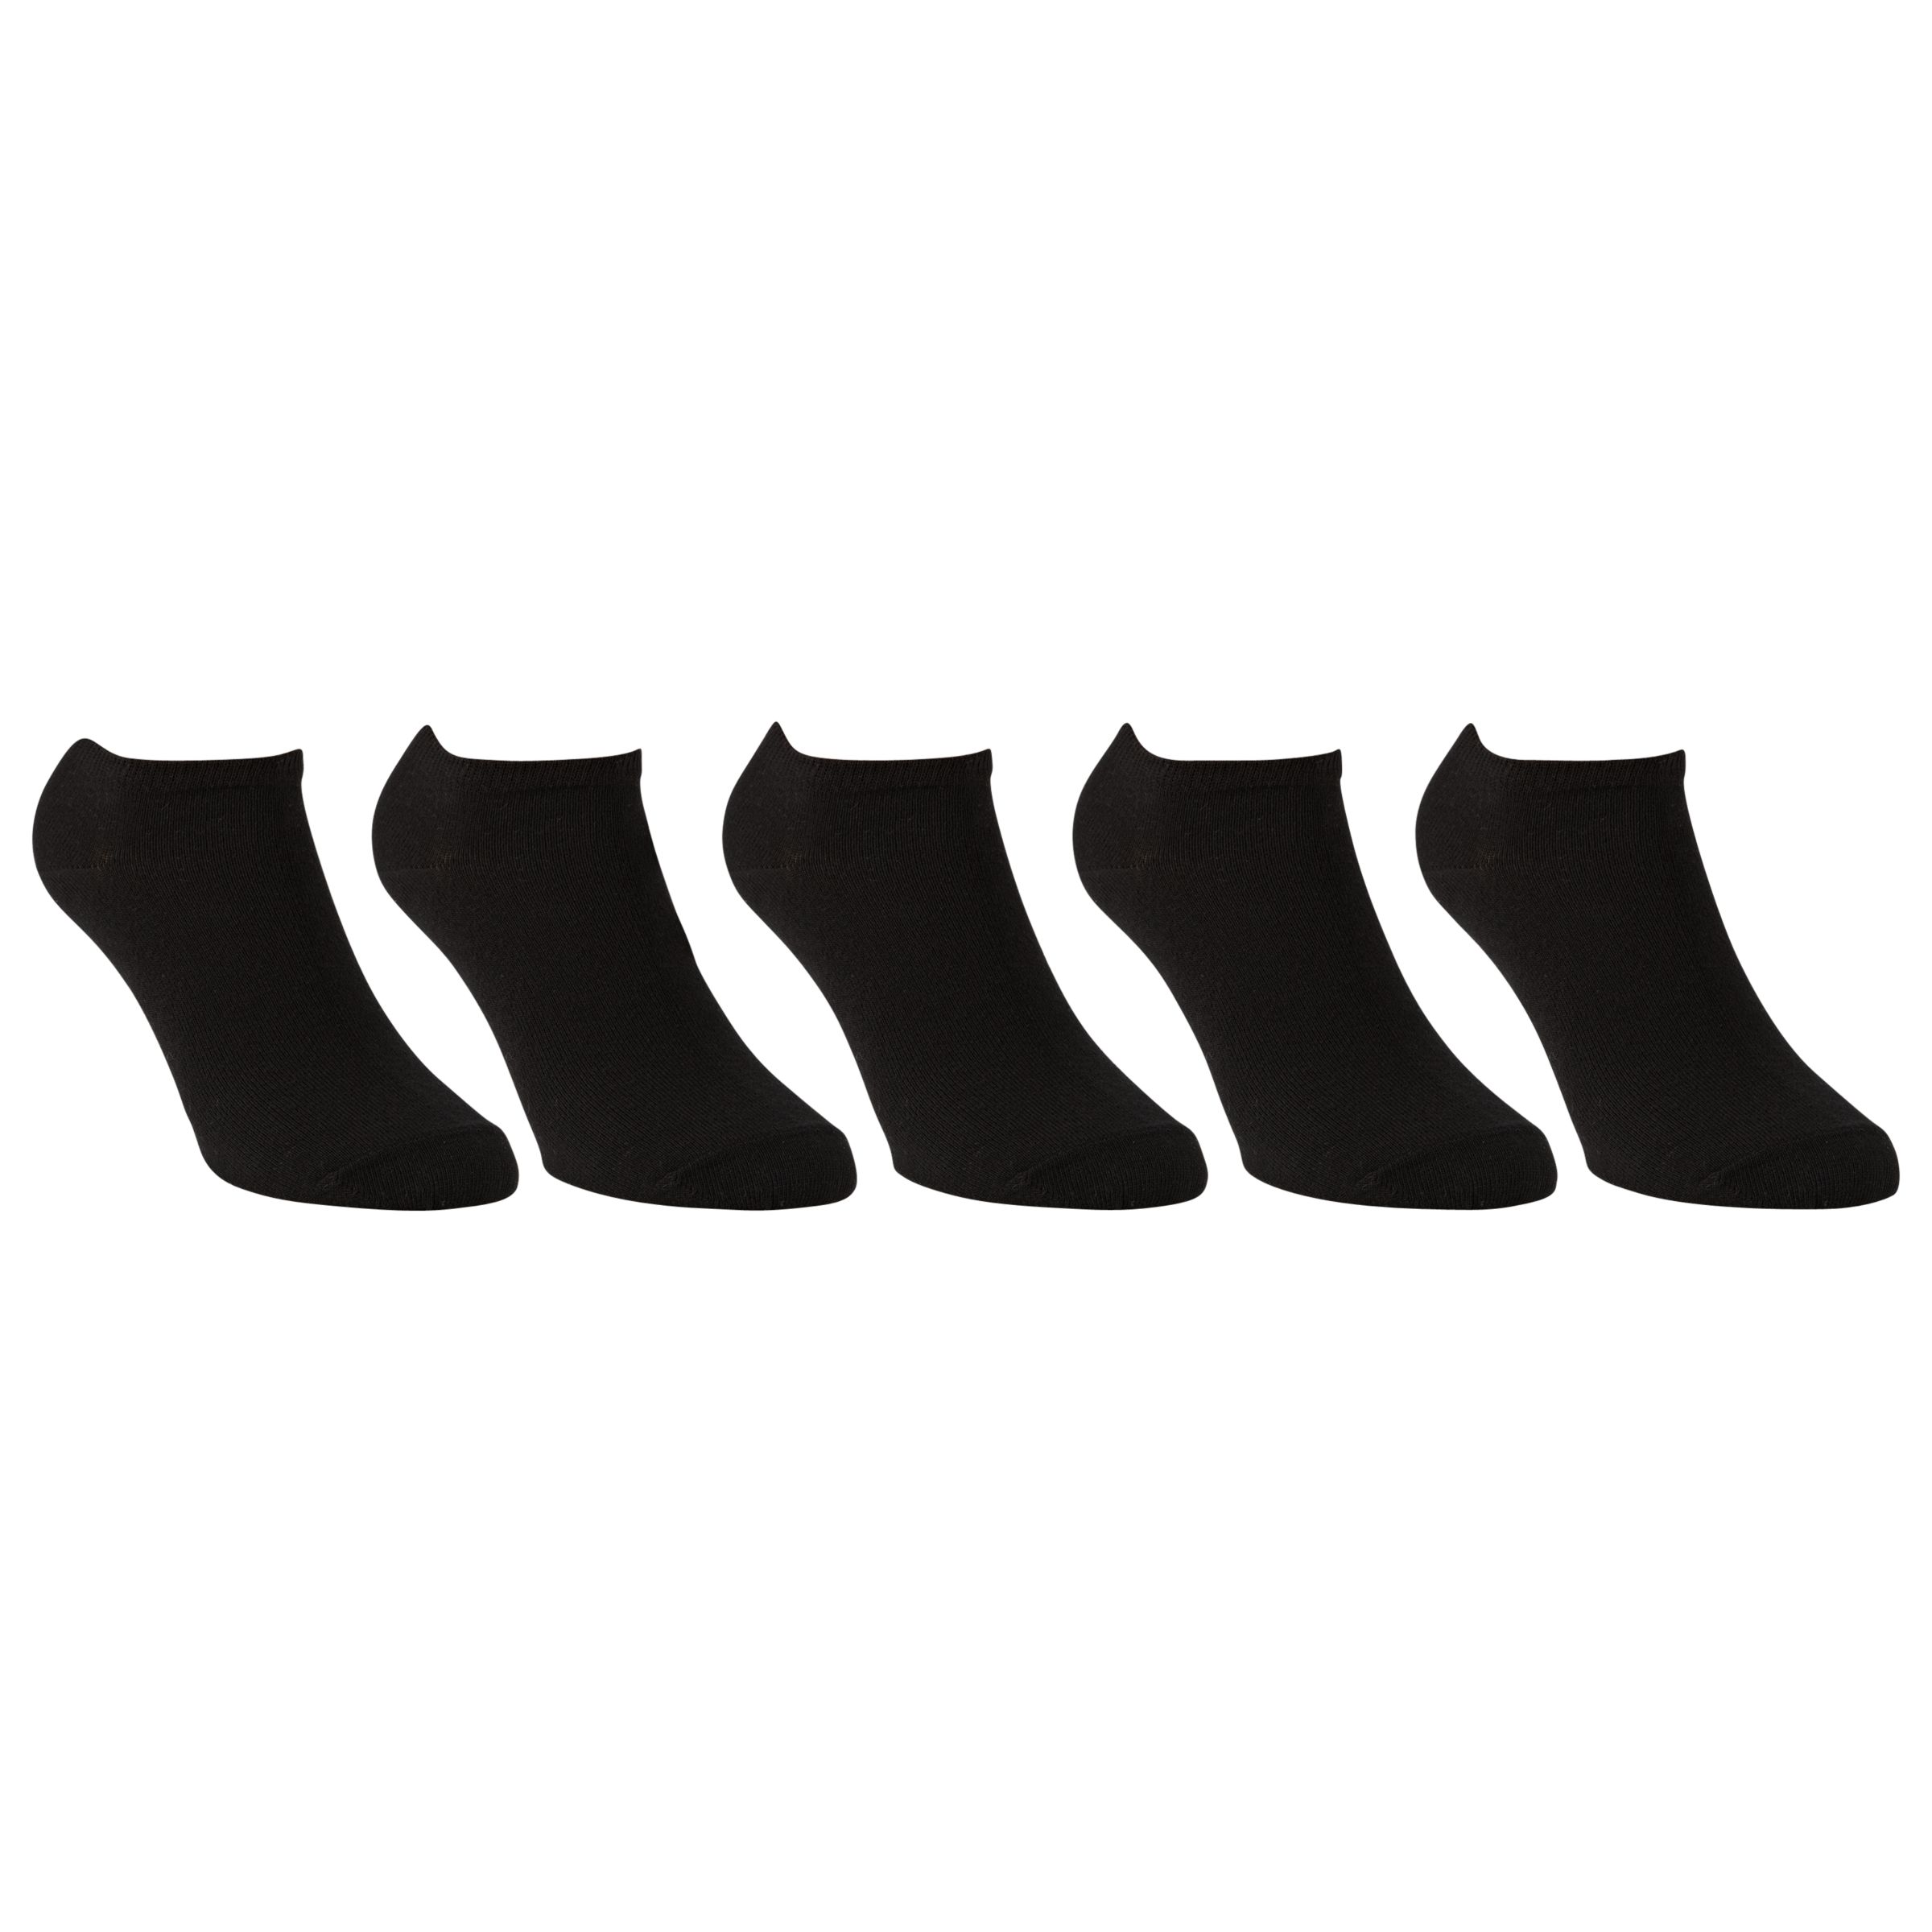 John Lewis & Partners Trainer Socks, Pack of 5, Black